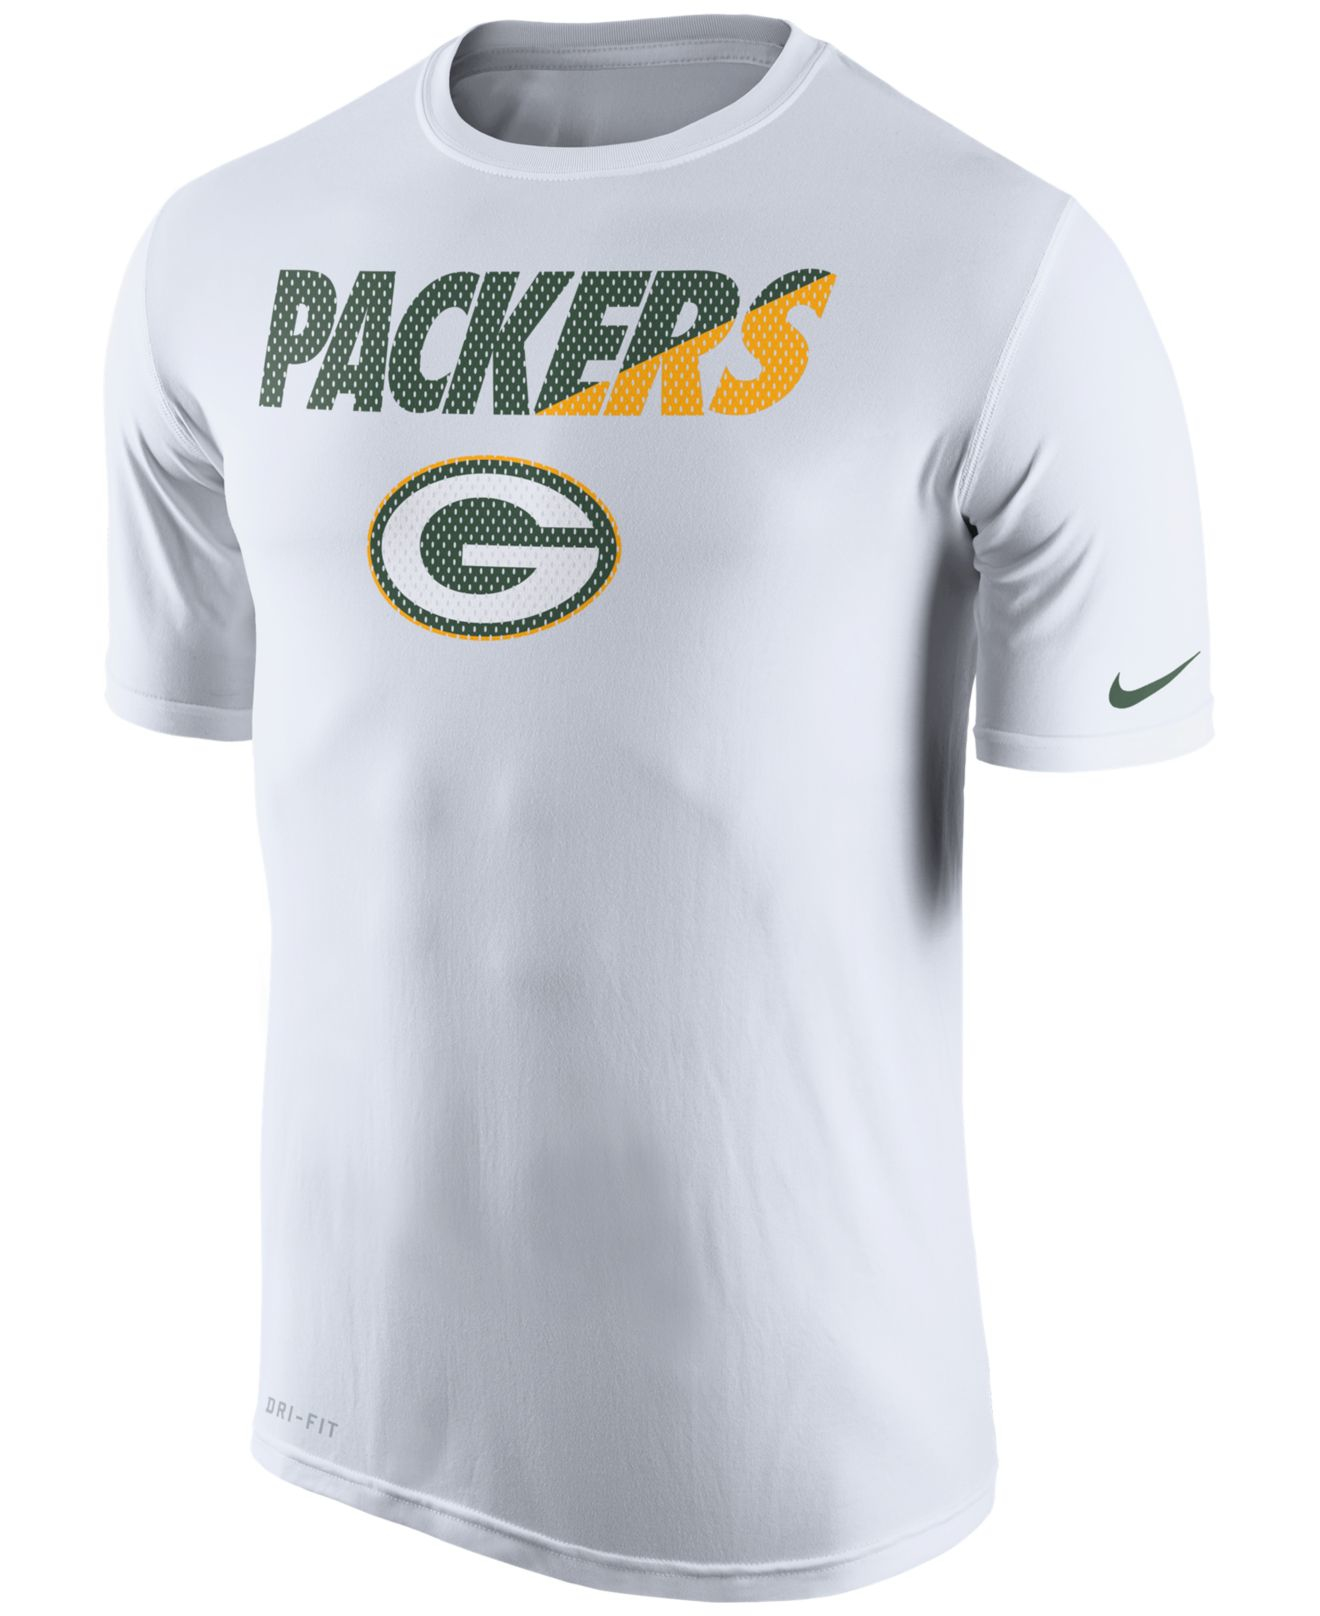 Lyst - Nike Men's Green Bay Packers Legend Staff Practice T-shirt in ...